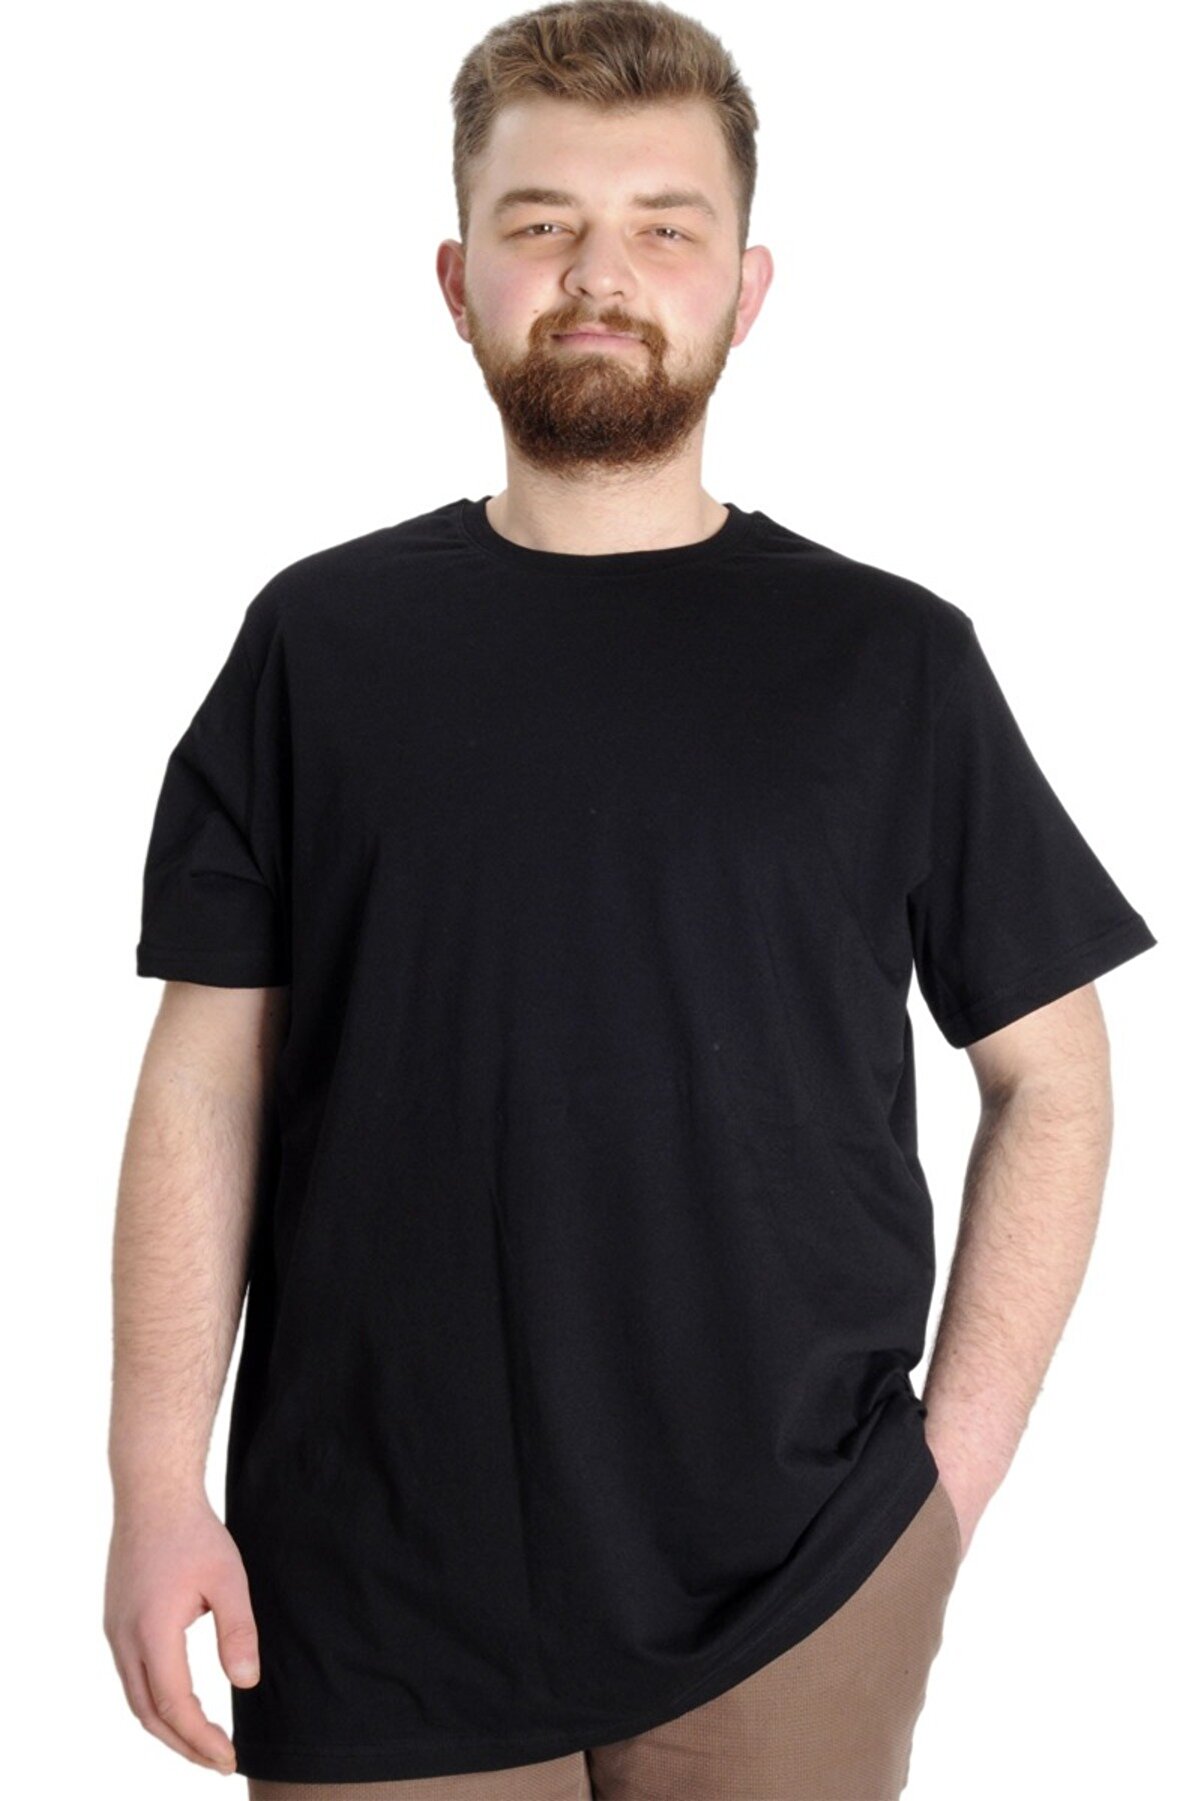 Modexl Mode Xl Büyük Beden Erkek T-shirt Basic 20031 Siyah